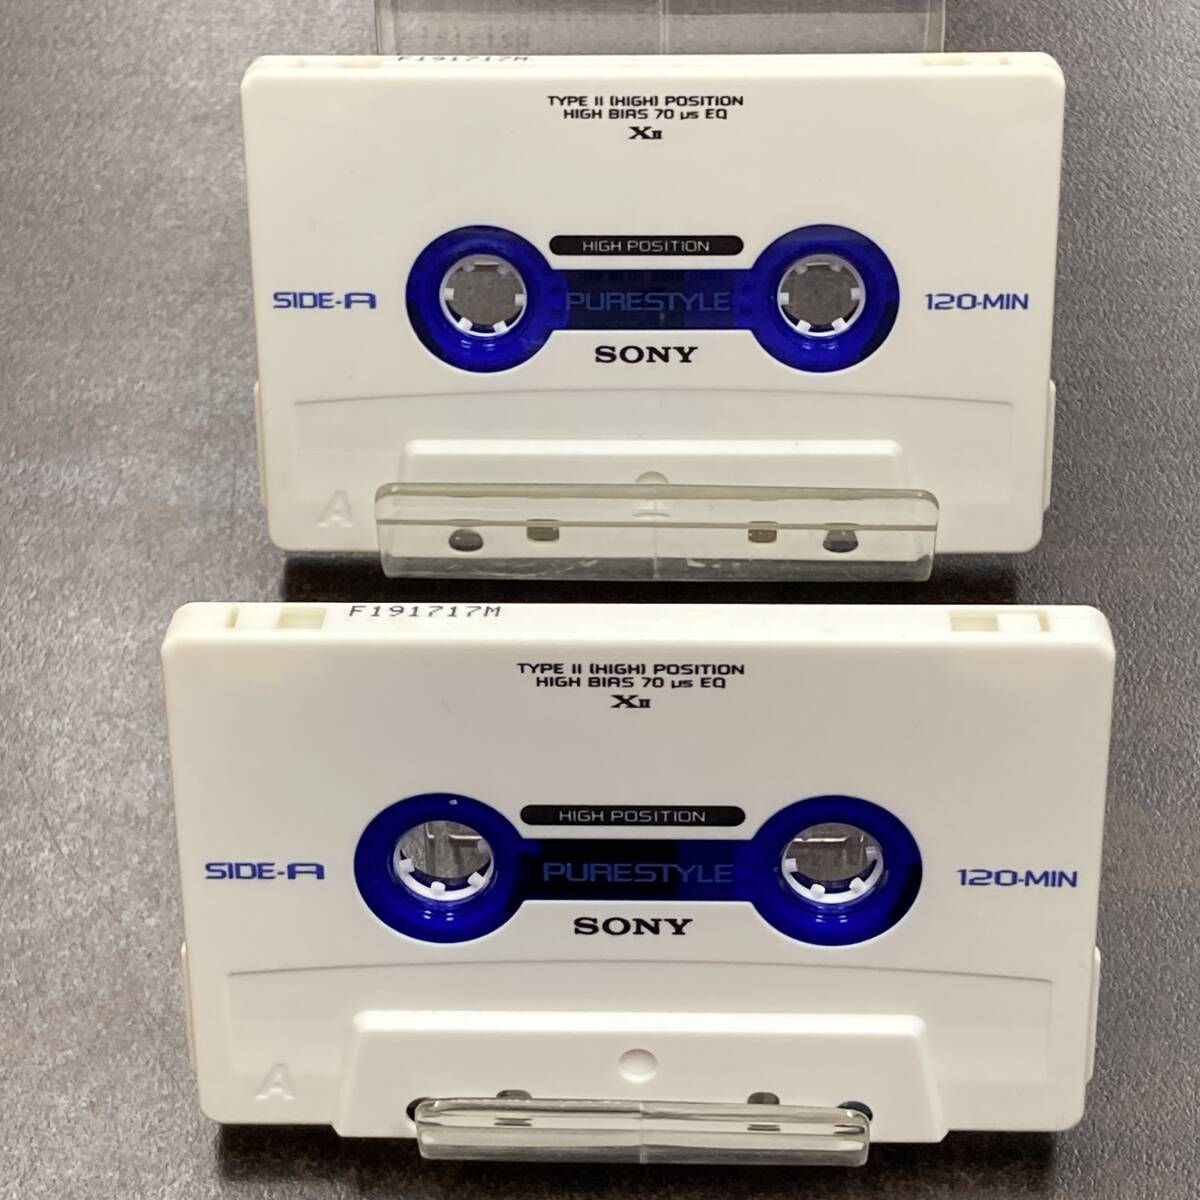 1993BT Sony XII 120 минут Hi Posi 2 шт кассетная лента /Two SONY XII 120 Type II High Position Audio Cassette